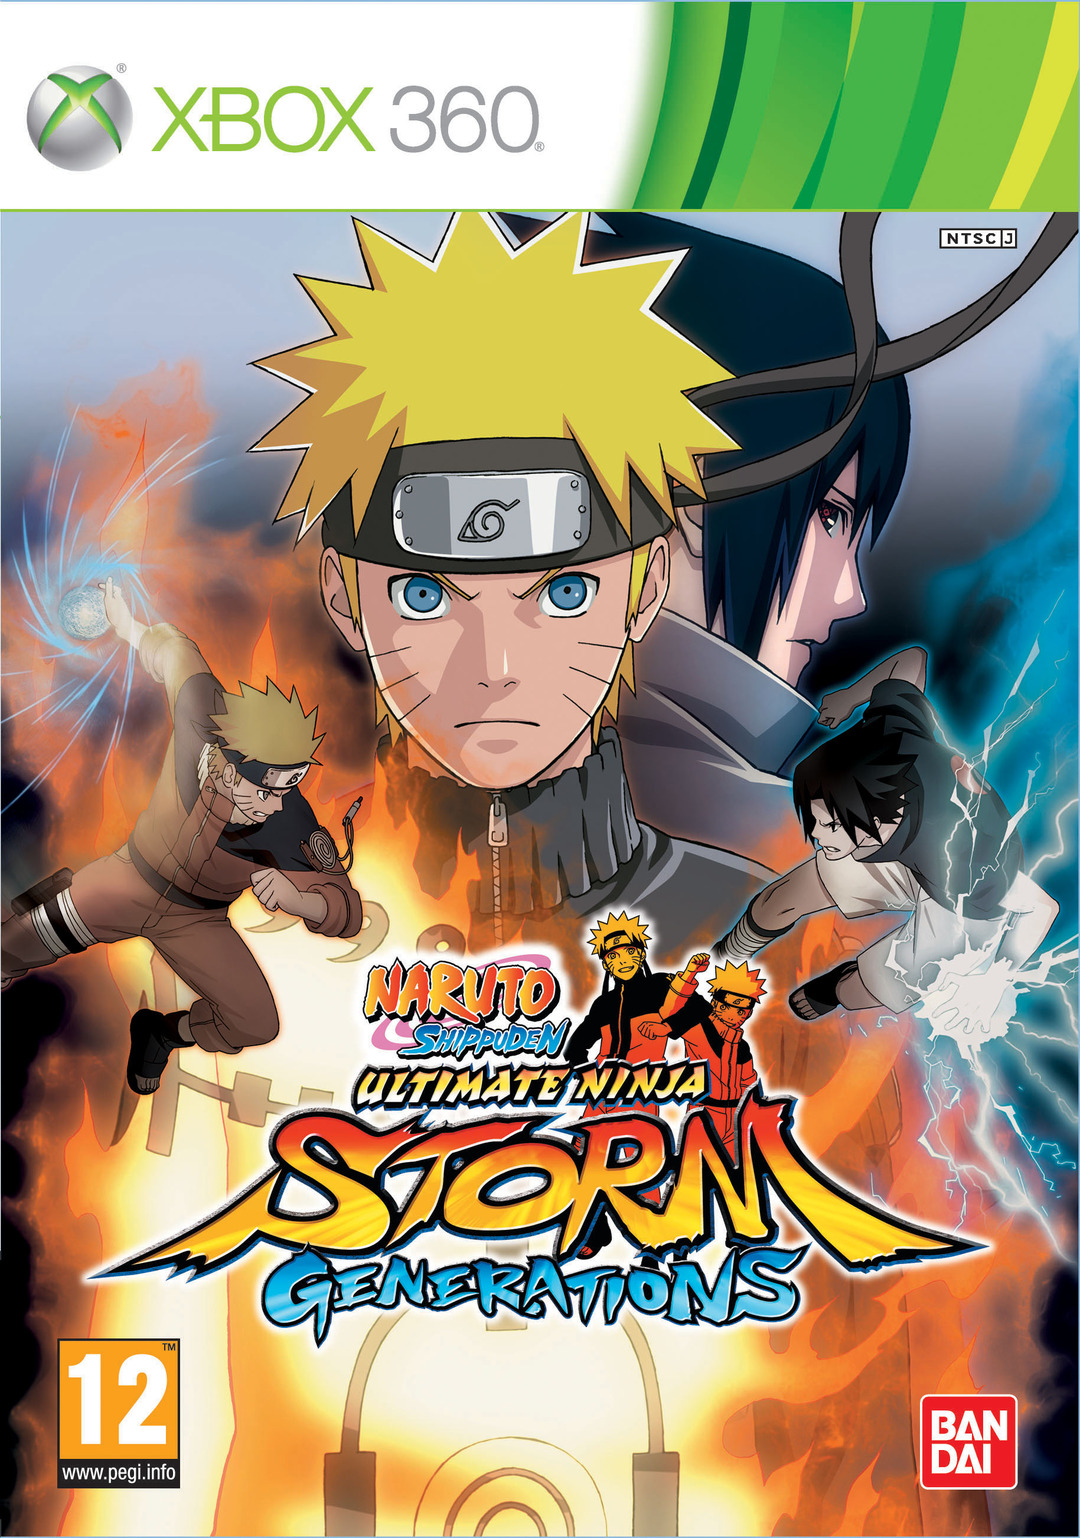 Naruto Shippuden Ultimate Ninja Storm Generations USA XBOX360 (exclue) [UL] Jaquette-naruto-shippuden-ultimate-ninja-storm-generations-xbox-360-cover-avant-g-1322555386